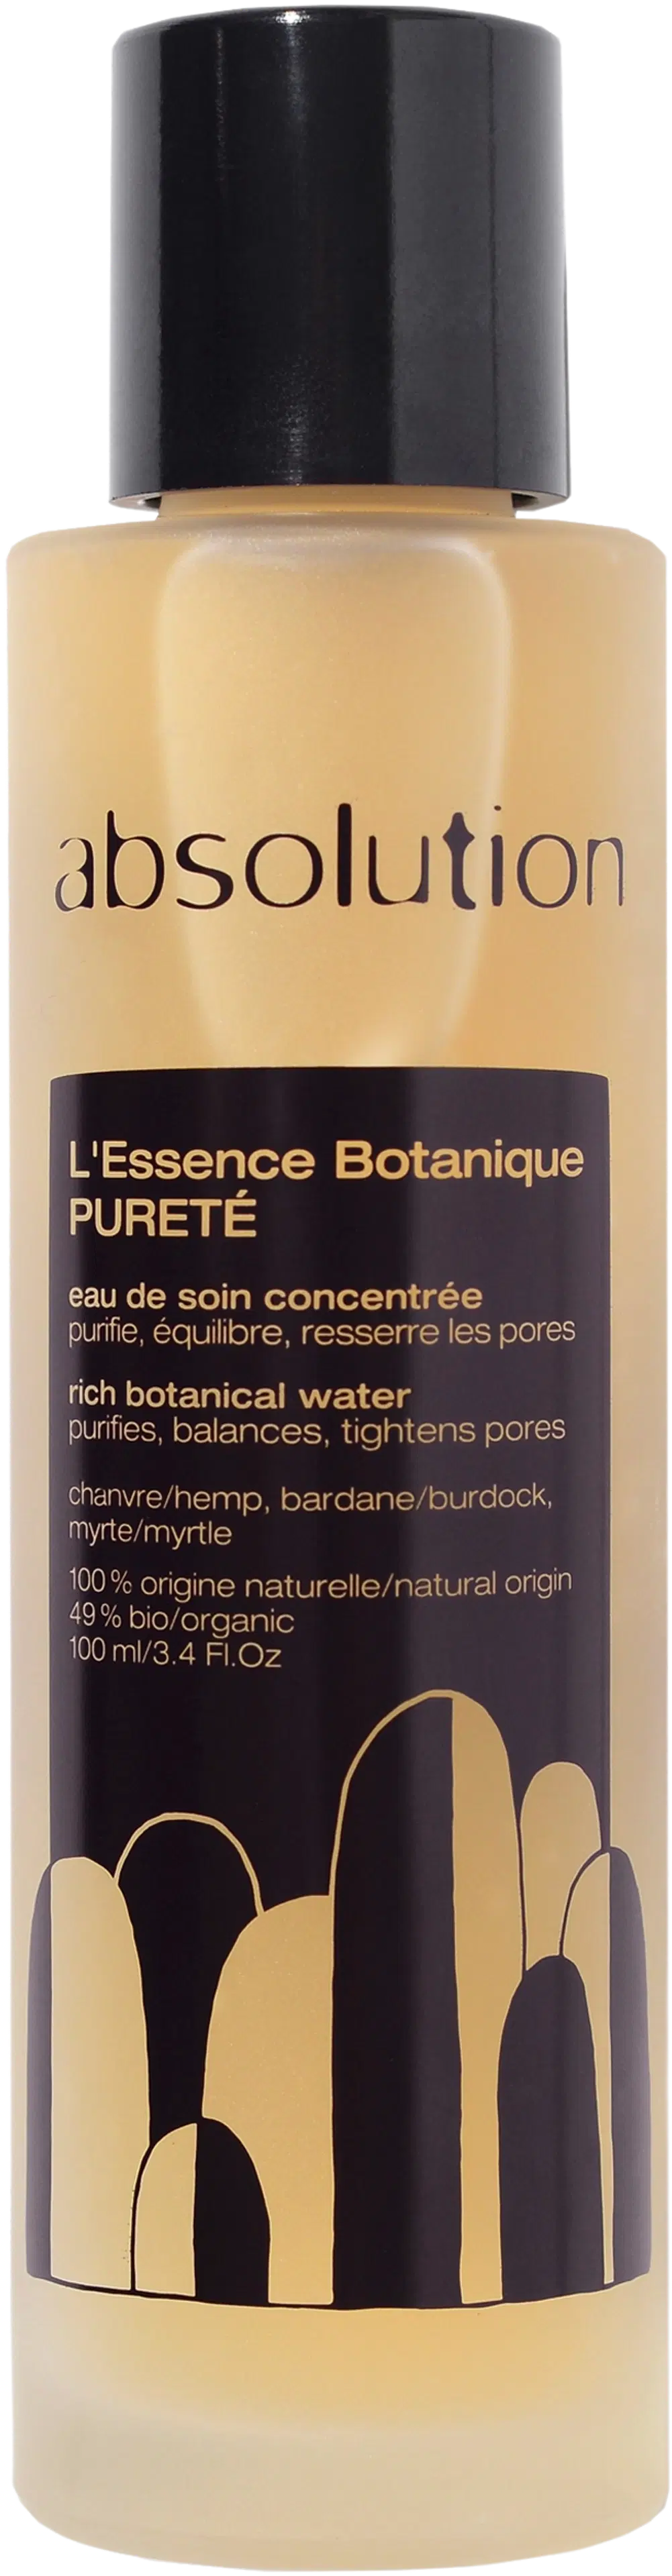 Absolution Essence Purete 100ml kasvovesi